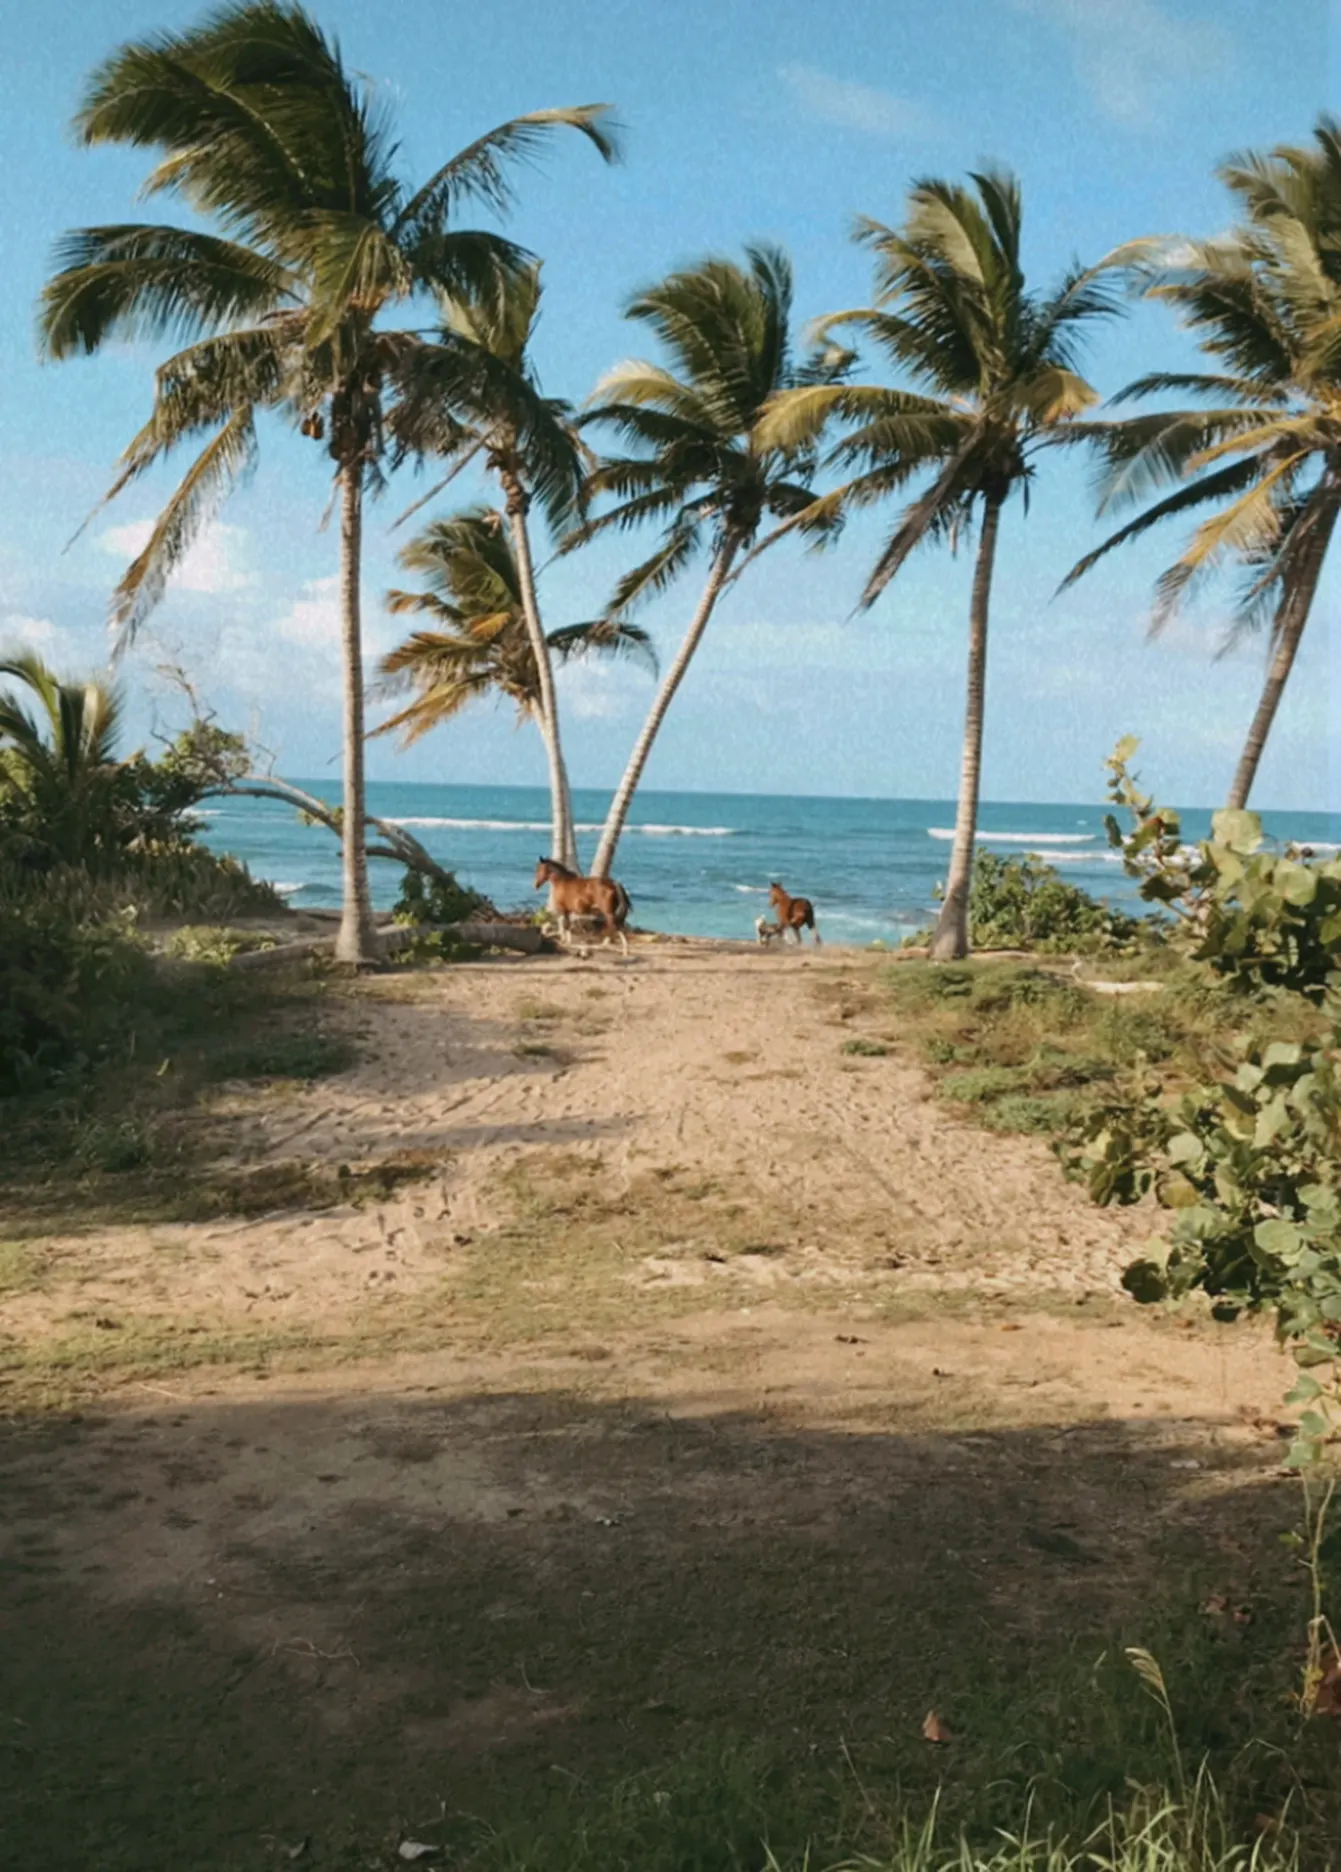 Vieques, foto di Roberta Da Soller, dicembre 2018.